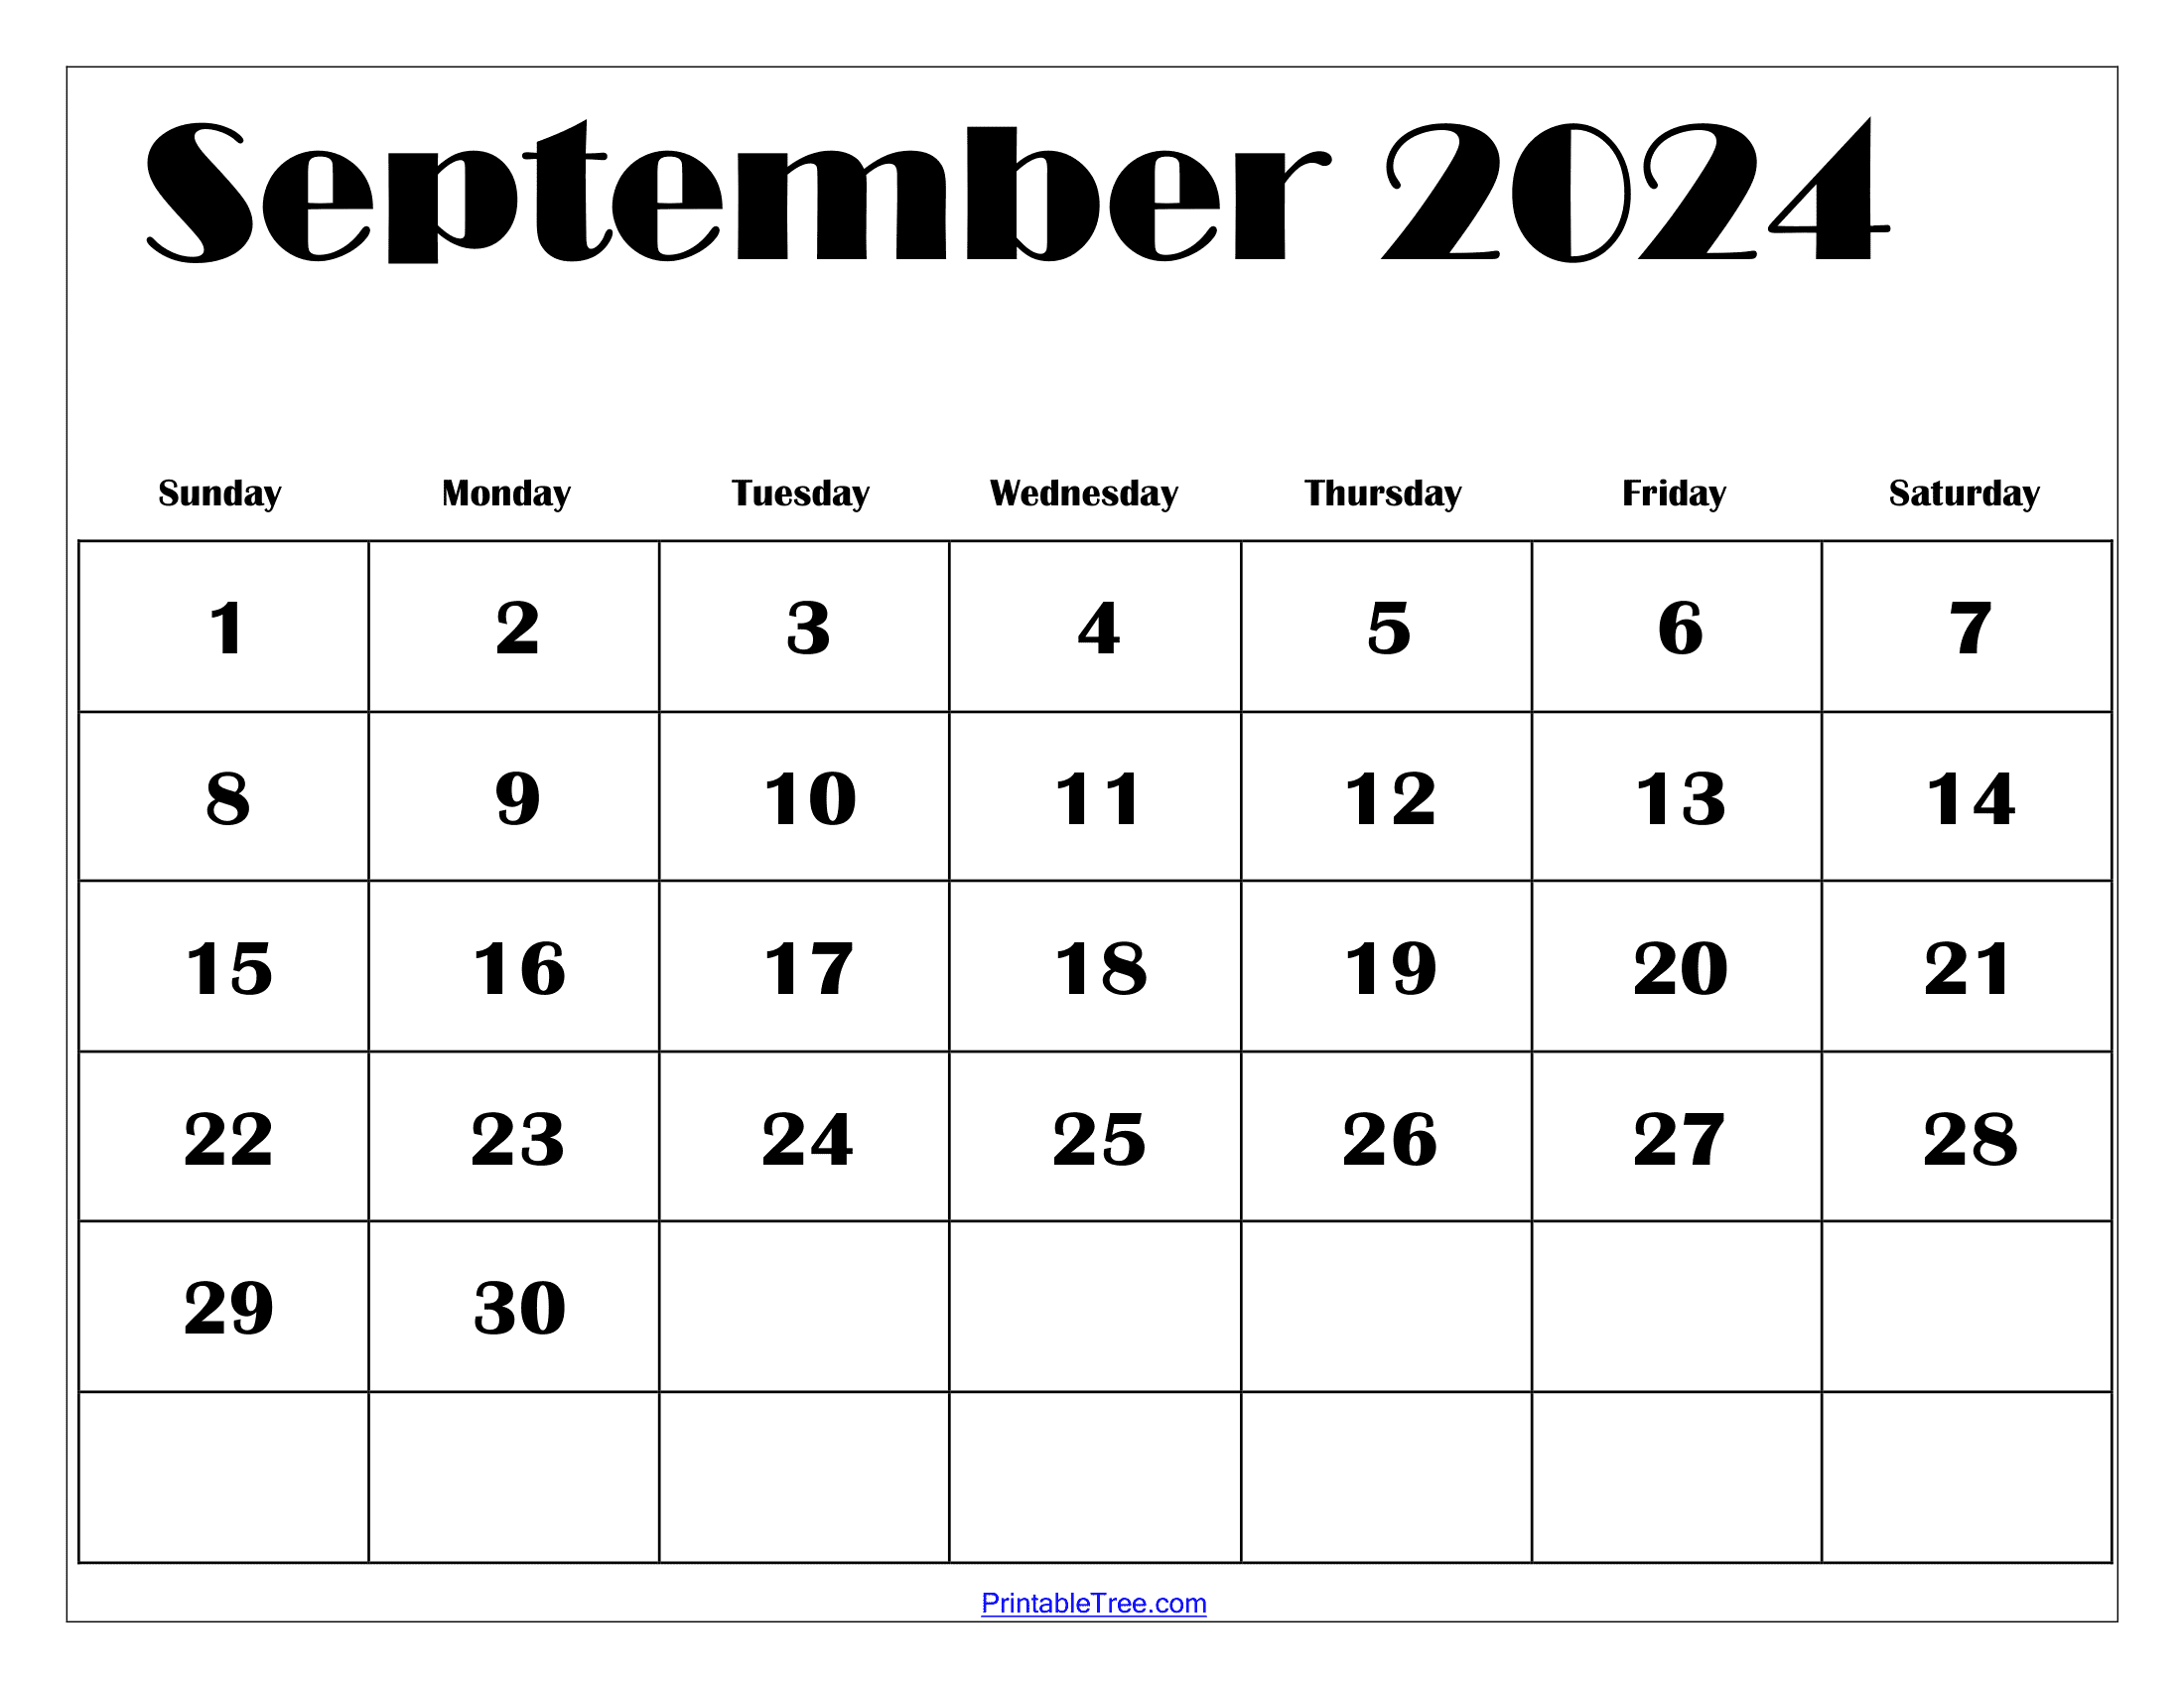 September 2024 Calendar Printable Pdf With Holidays for Sept 2024 Calendar Printable Free